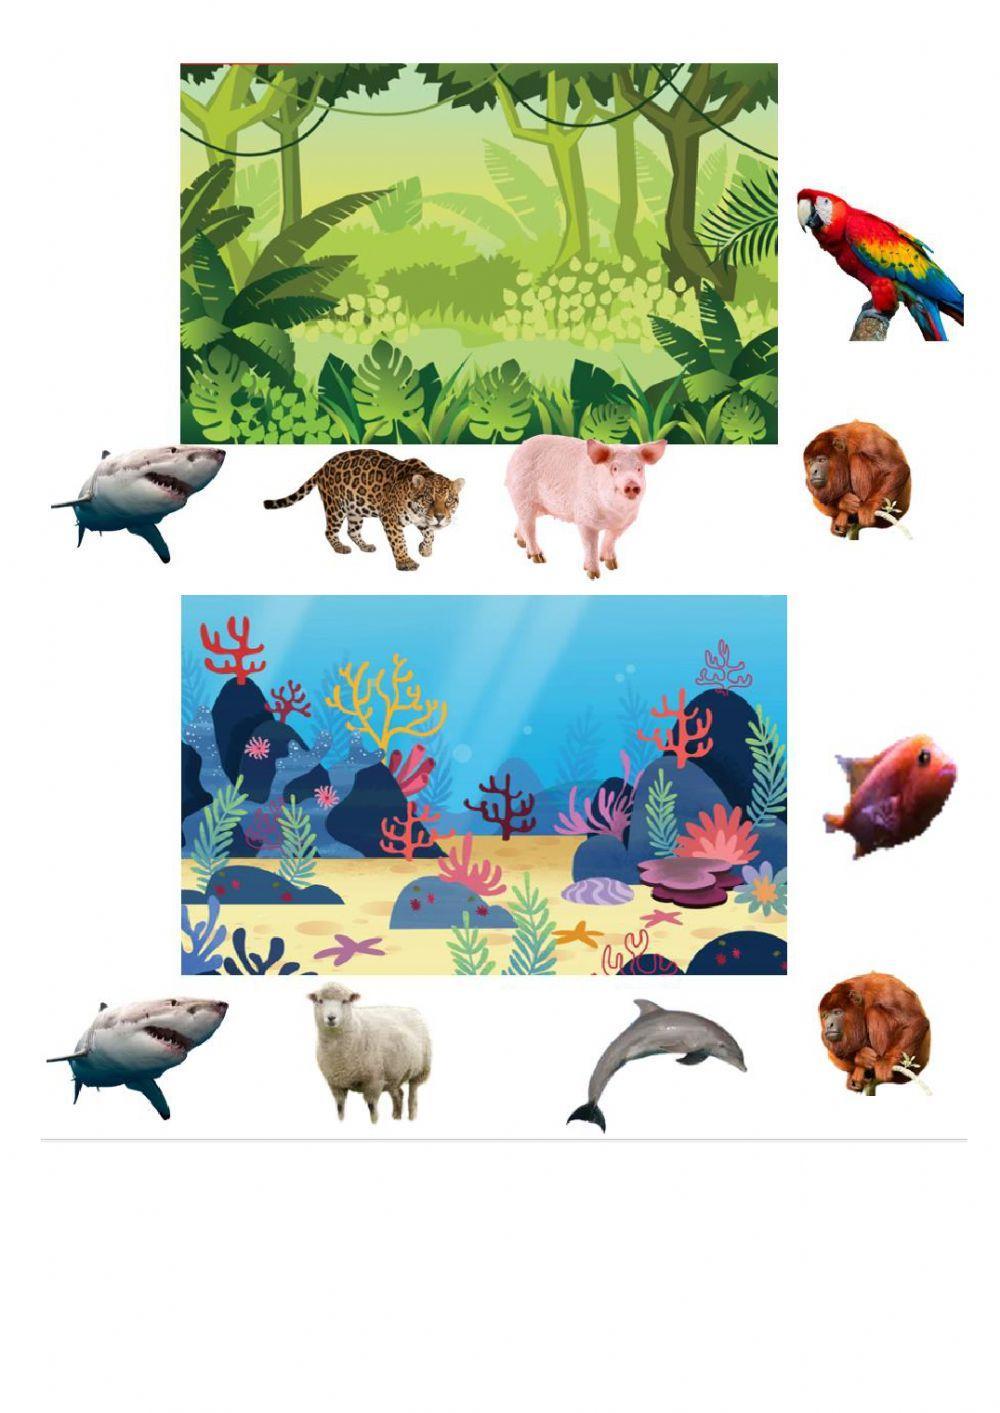 Animals and Habitats